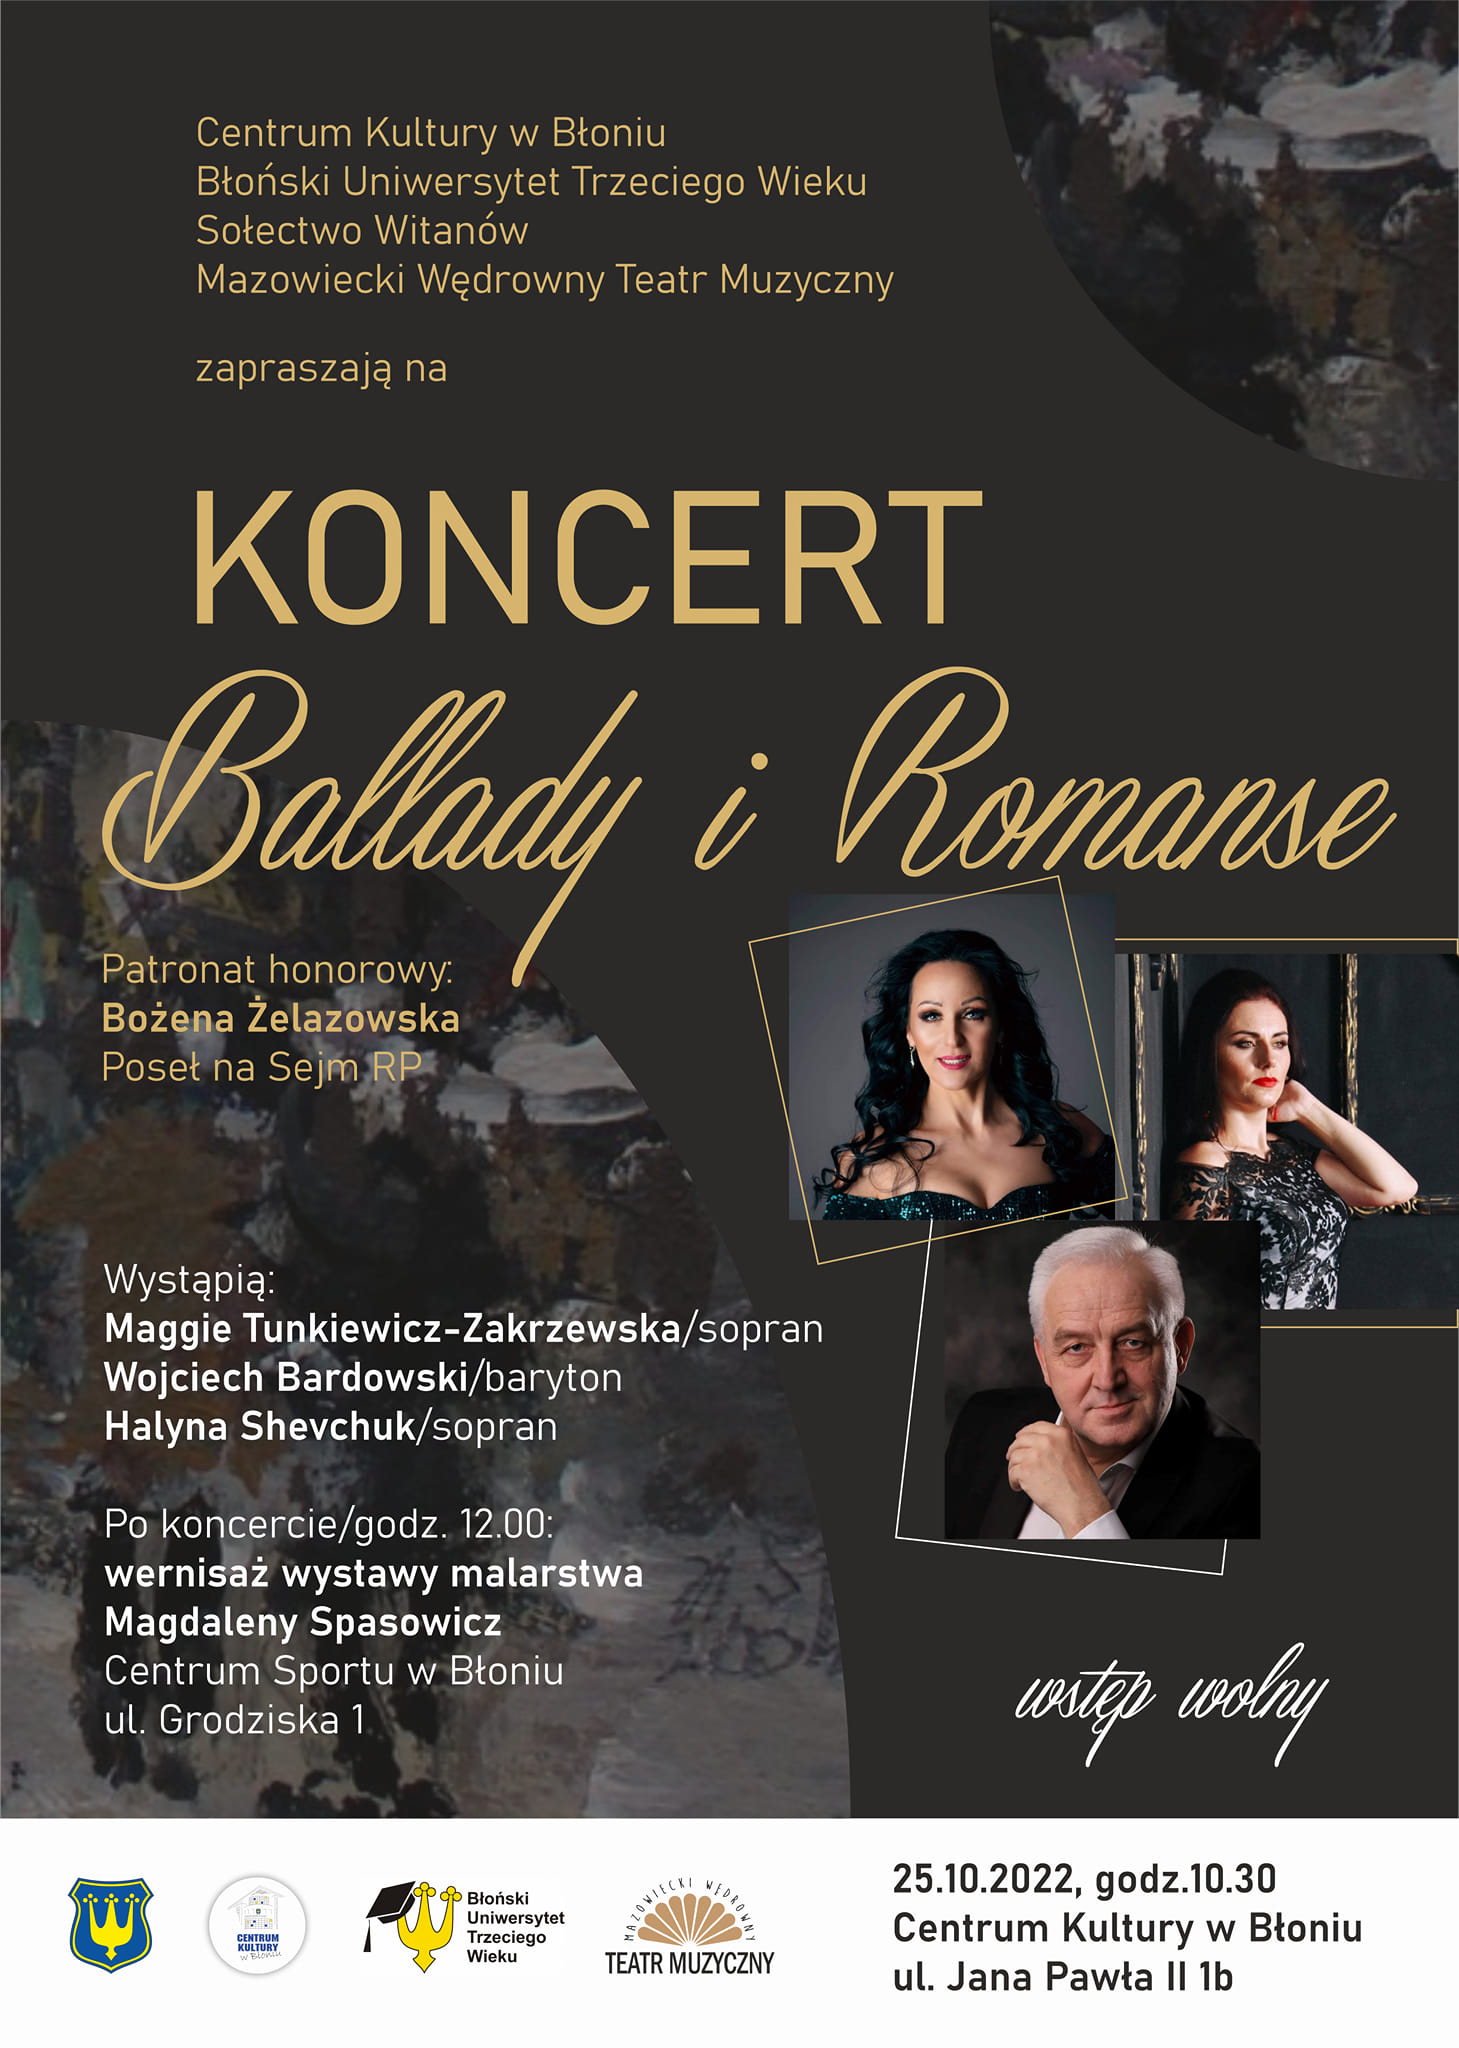 Концерт "Ballady i Romanse" 